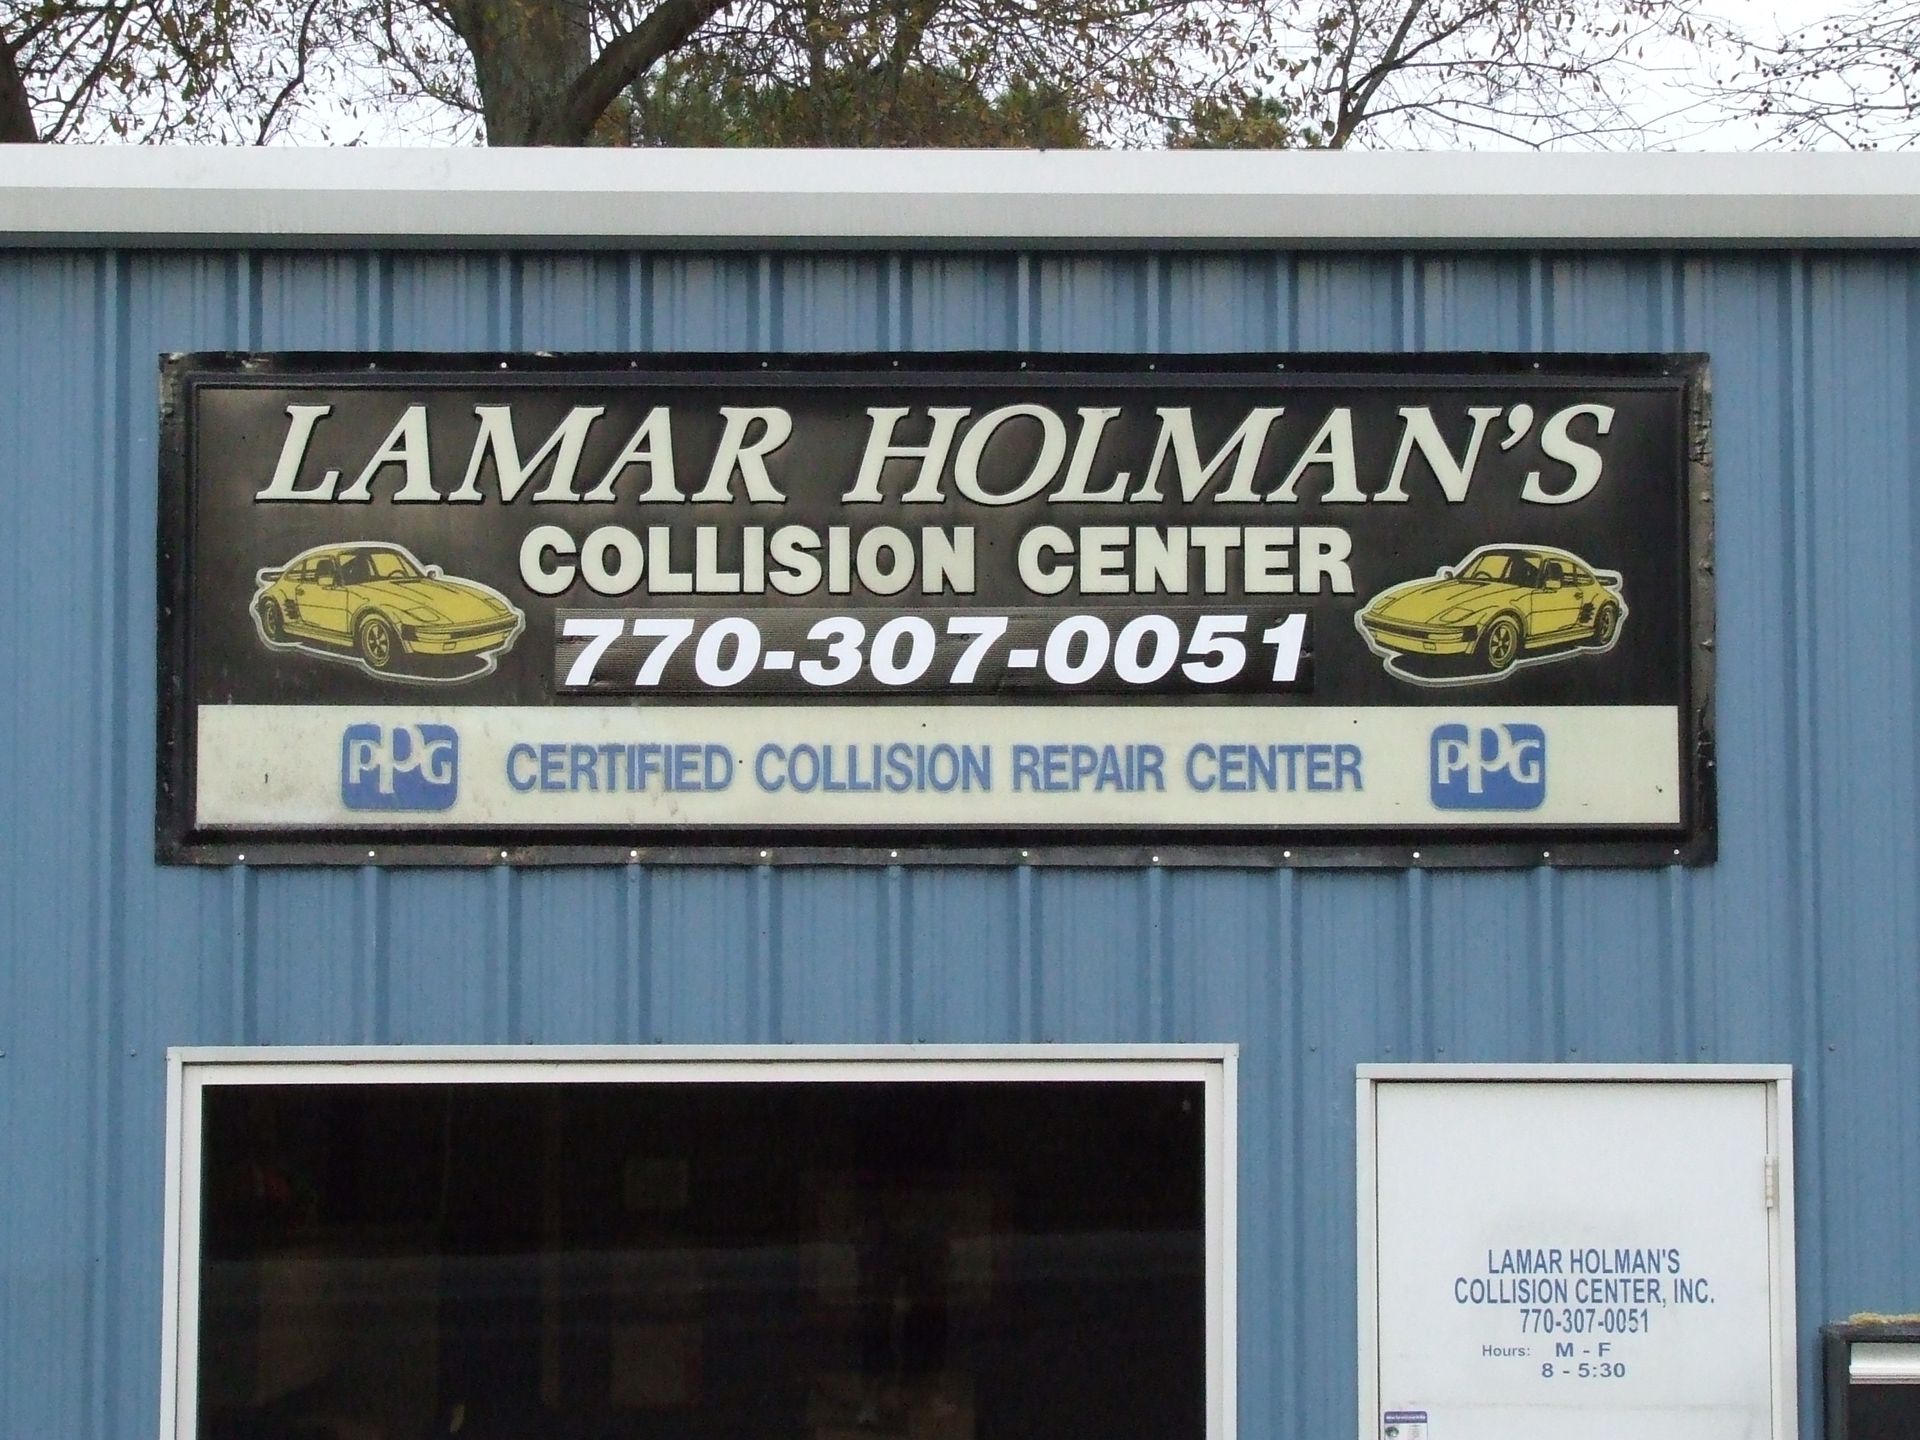 lamar holman 's collision center is a certified collision repair center